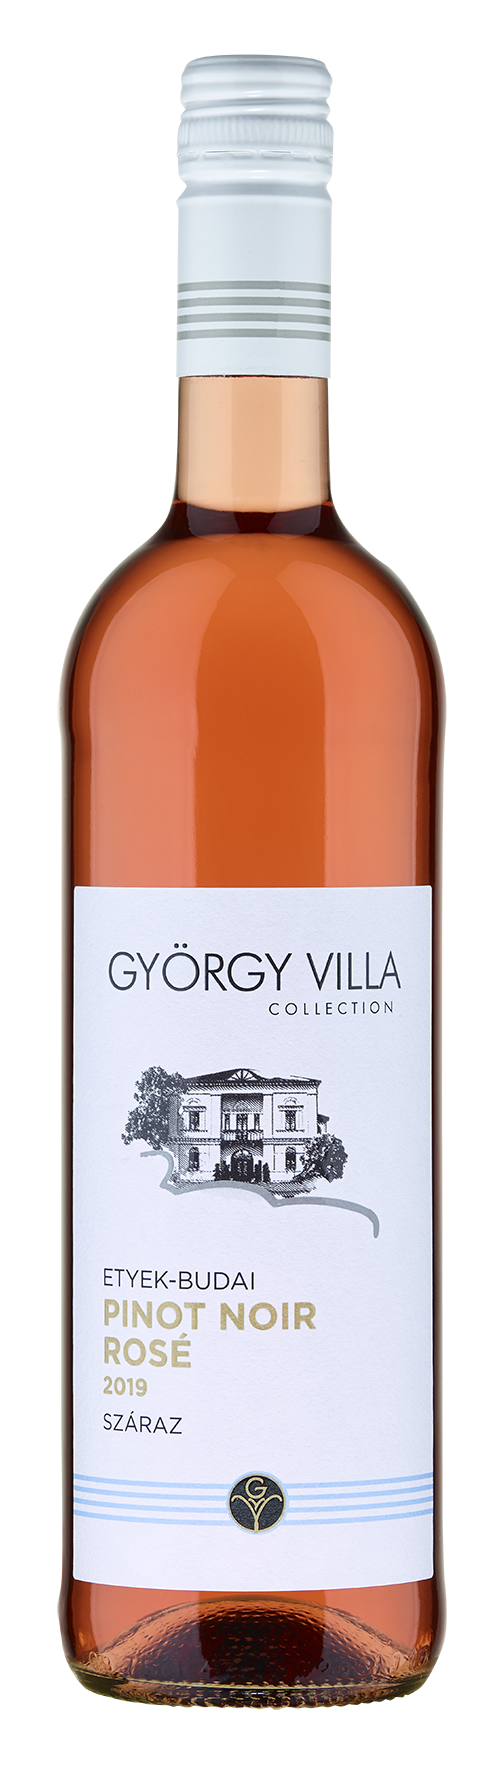 György-Villa Collection Etyek-Budai Pinot Noir Rosé 2016